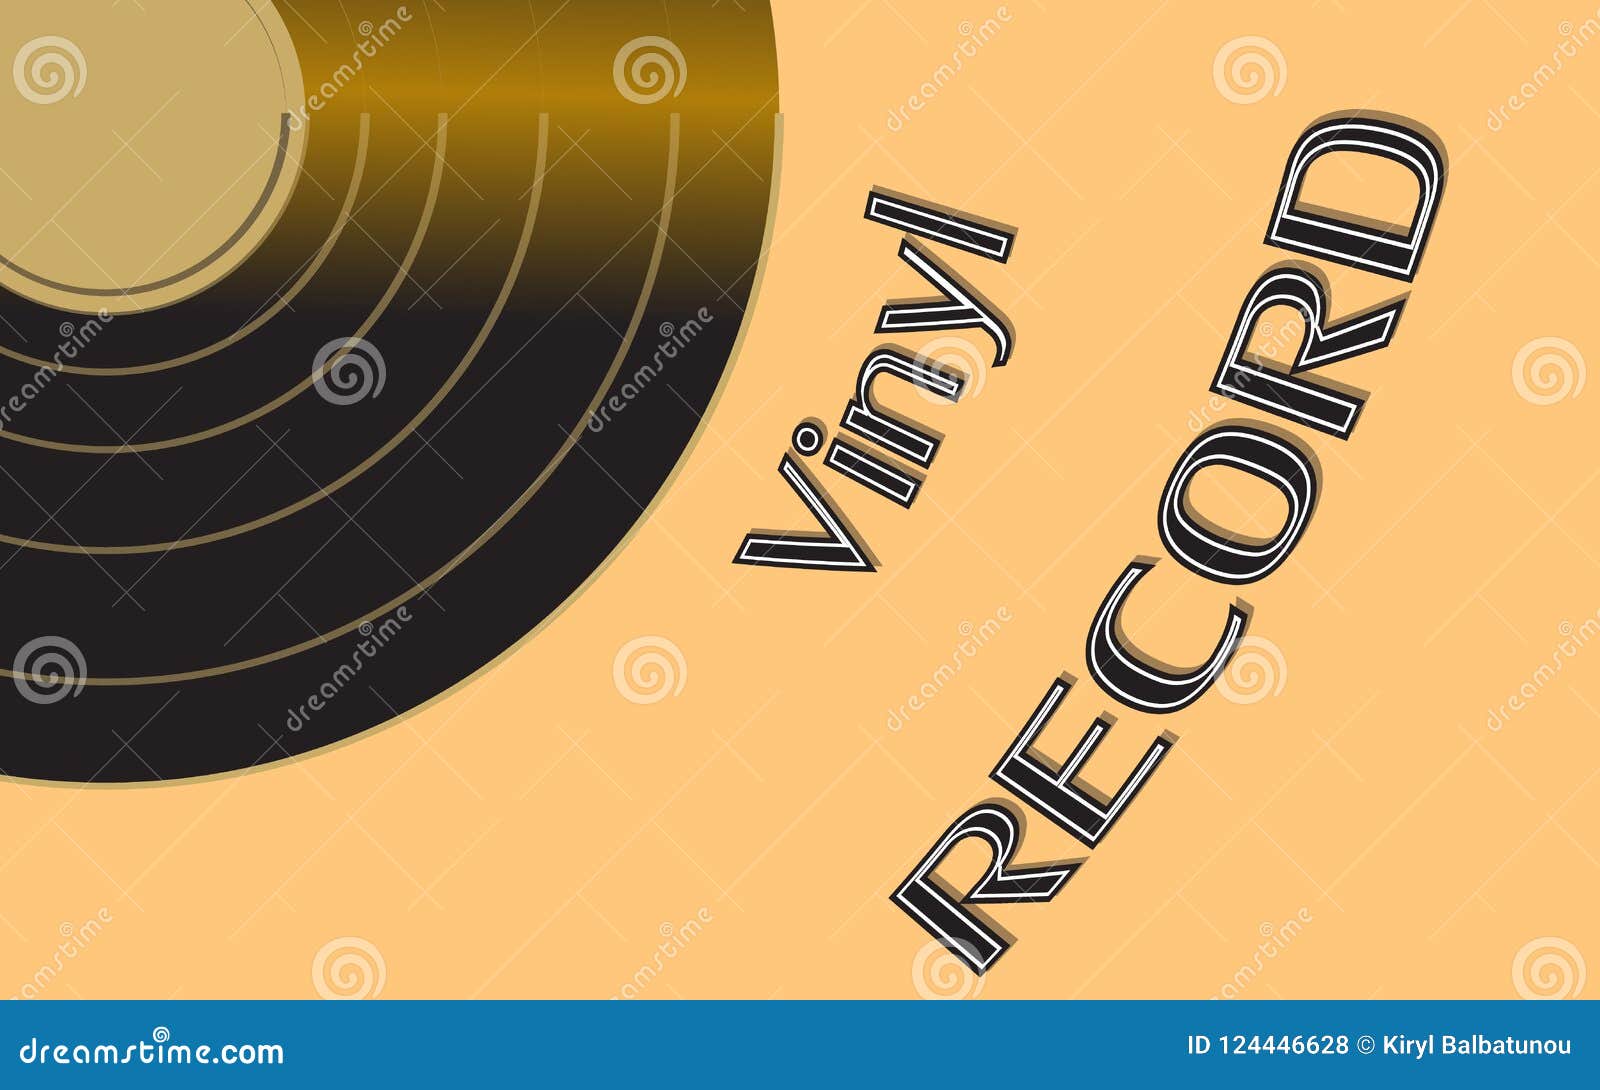 soundobject records